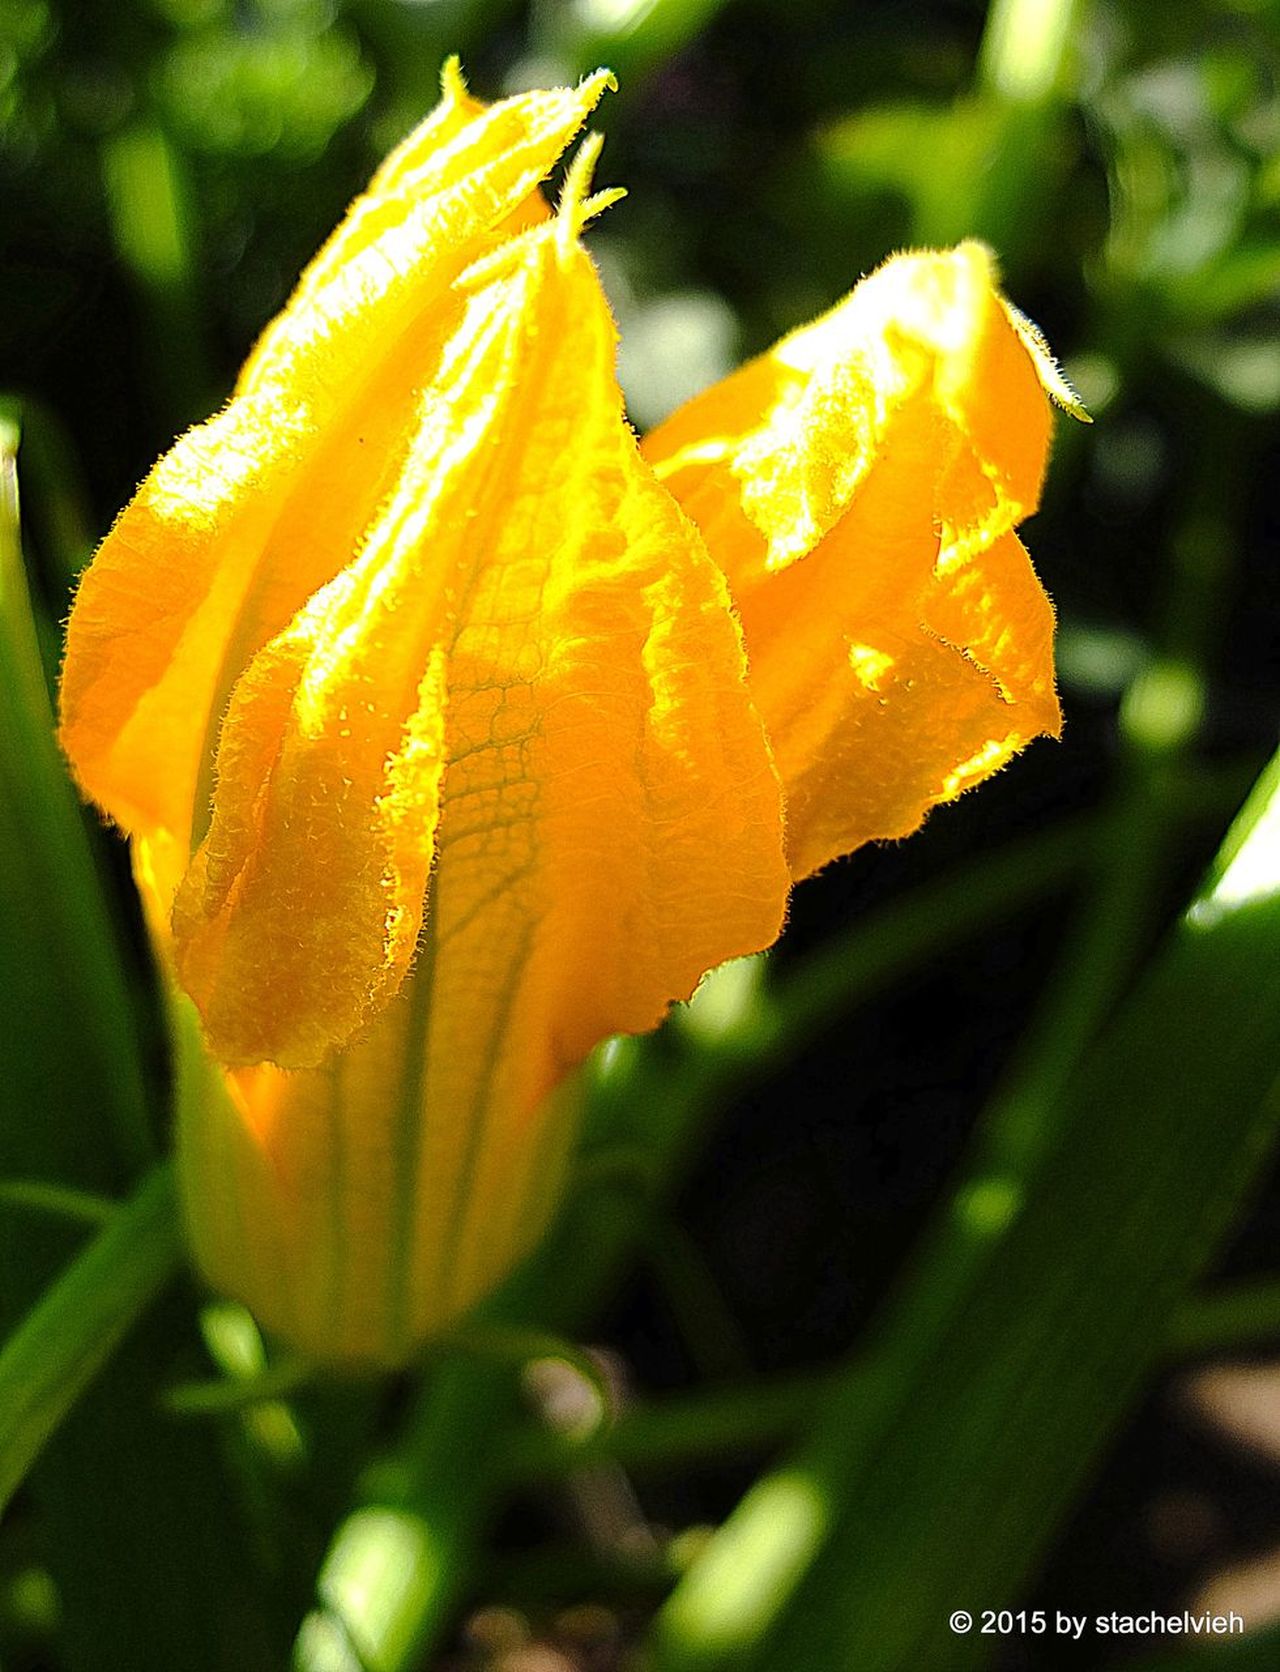 In the garden, yellow